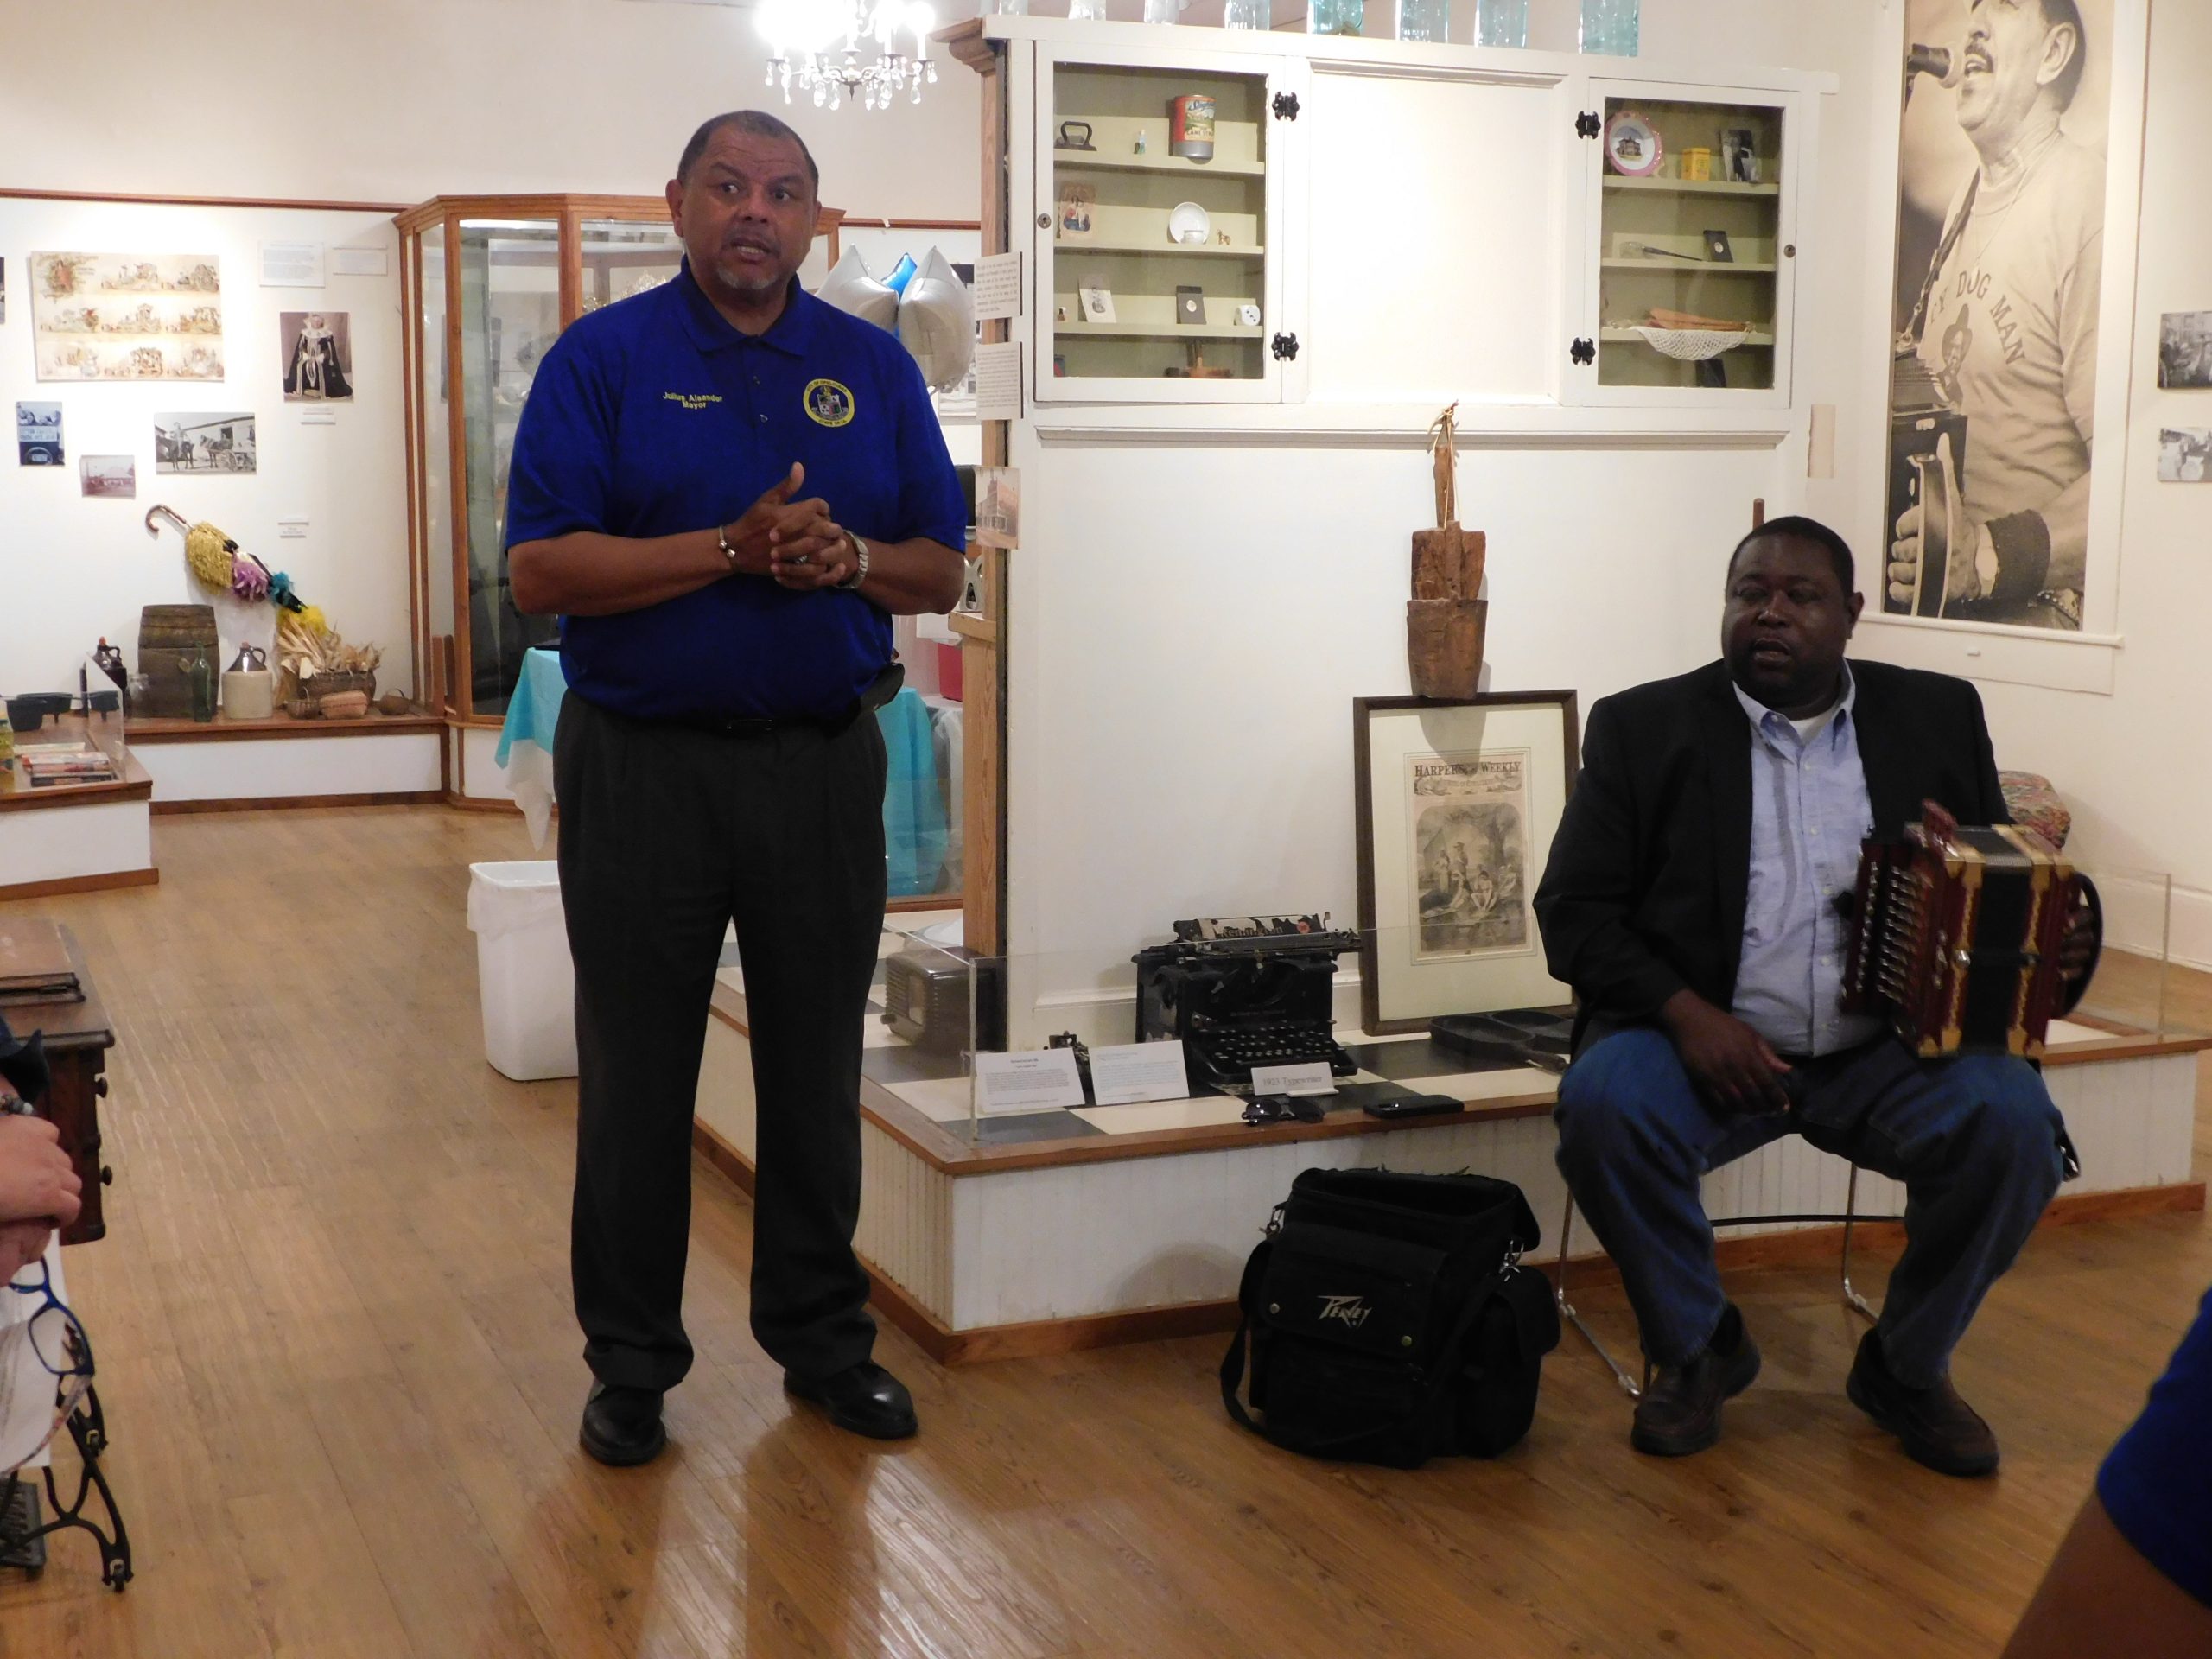 Mayor Julius Alsandor speaks at the museum. Accordionist Joe Hall in the background